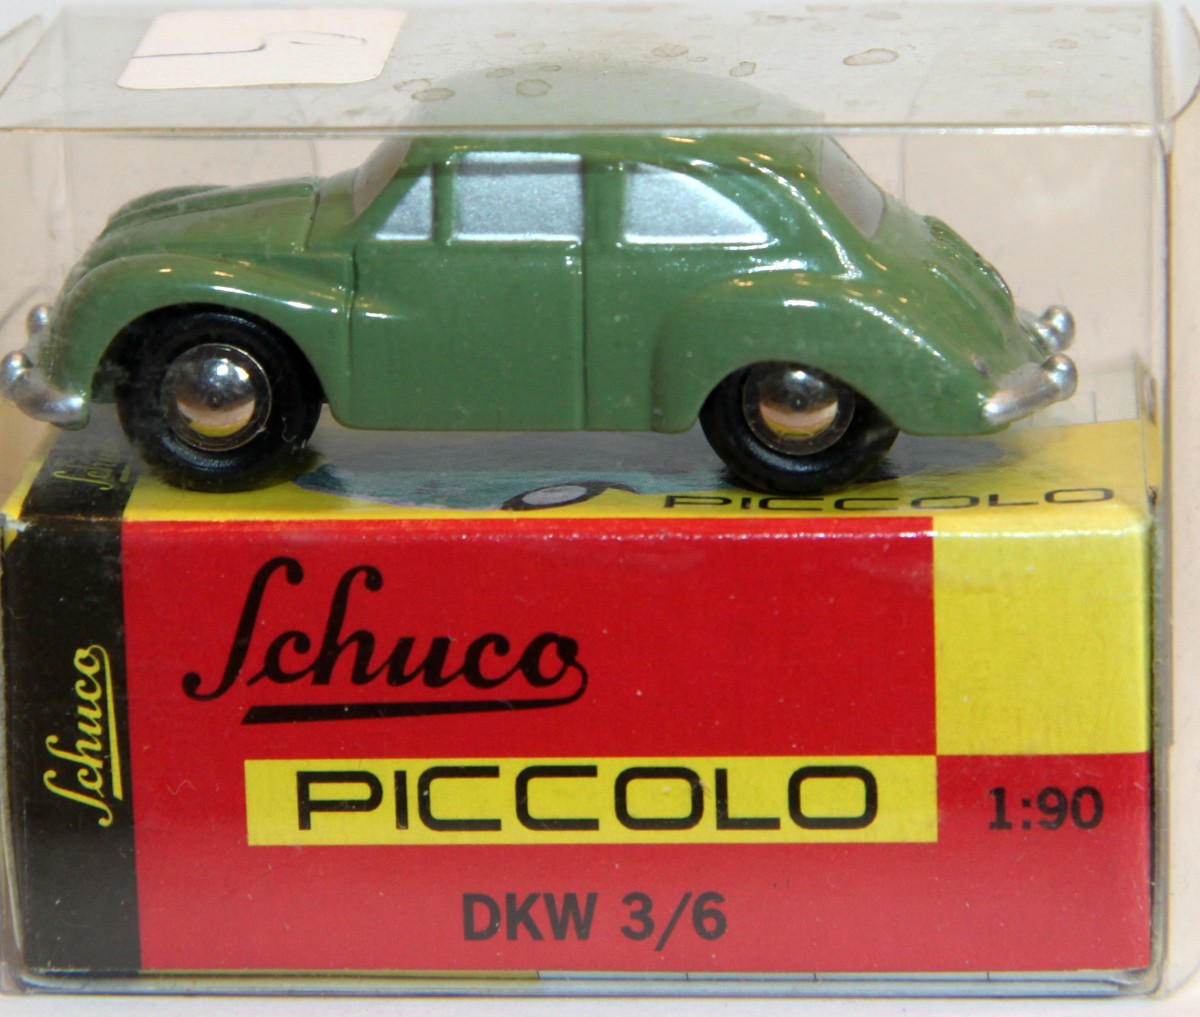 Schuco  01351 Piccolo DKW 3/6, grün, im Originalkarton(2)